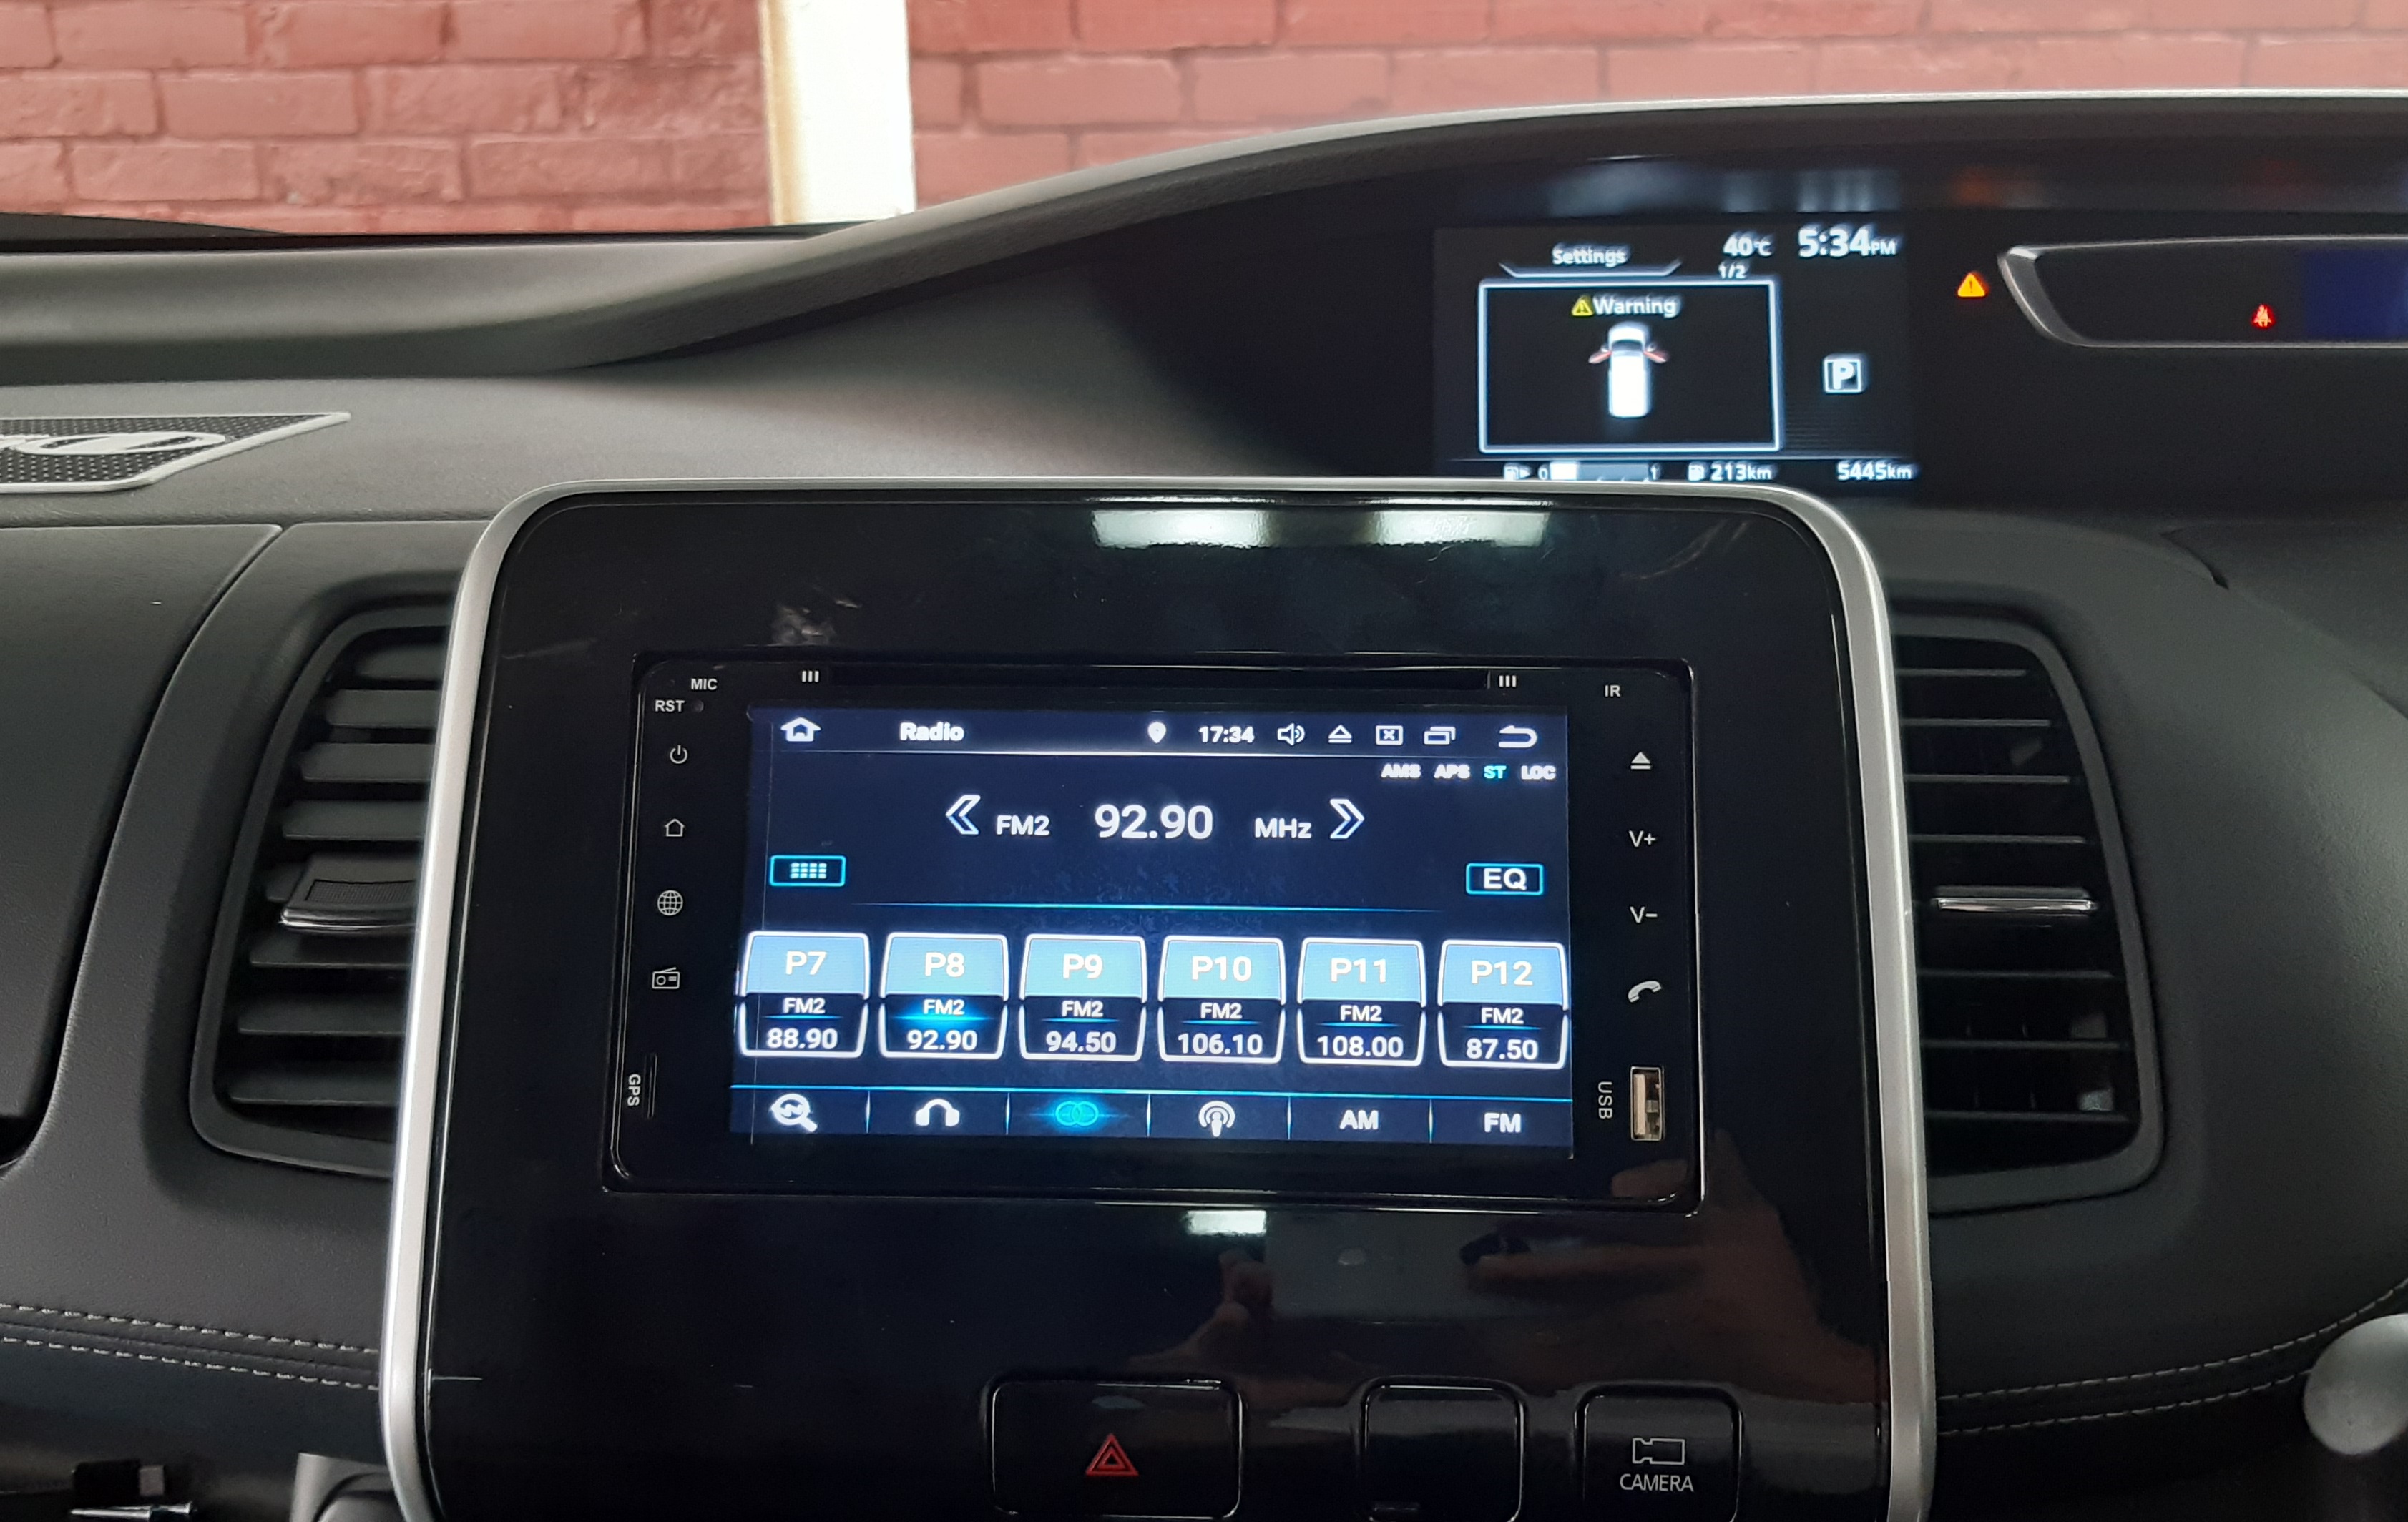 Nissan Serena TCAT Wide 2Din DVD 6.95″ Android Navigation System (T061)